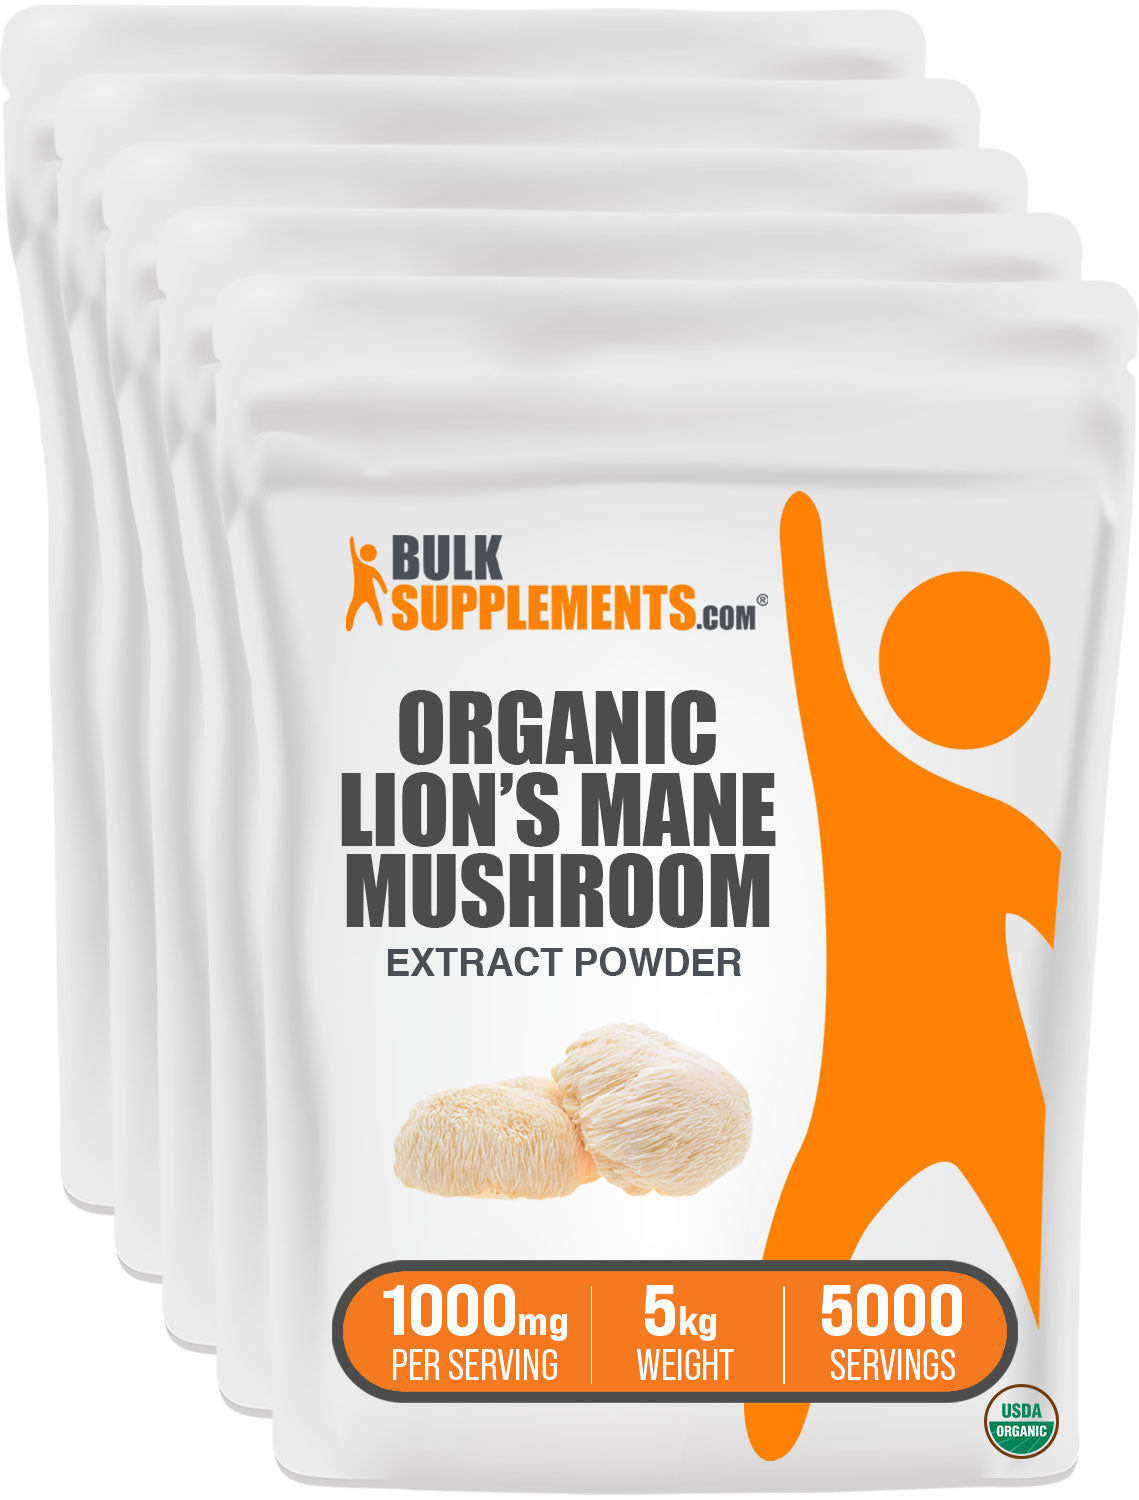 Organic lion's mane mushroom extract powder 5kg